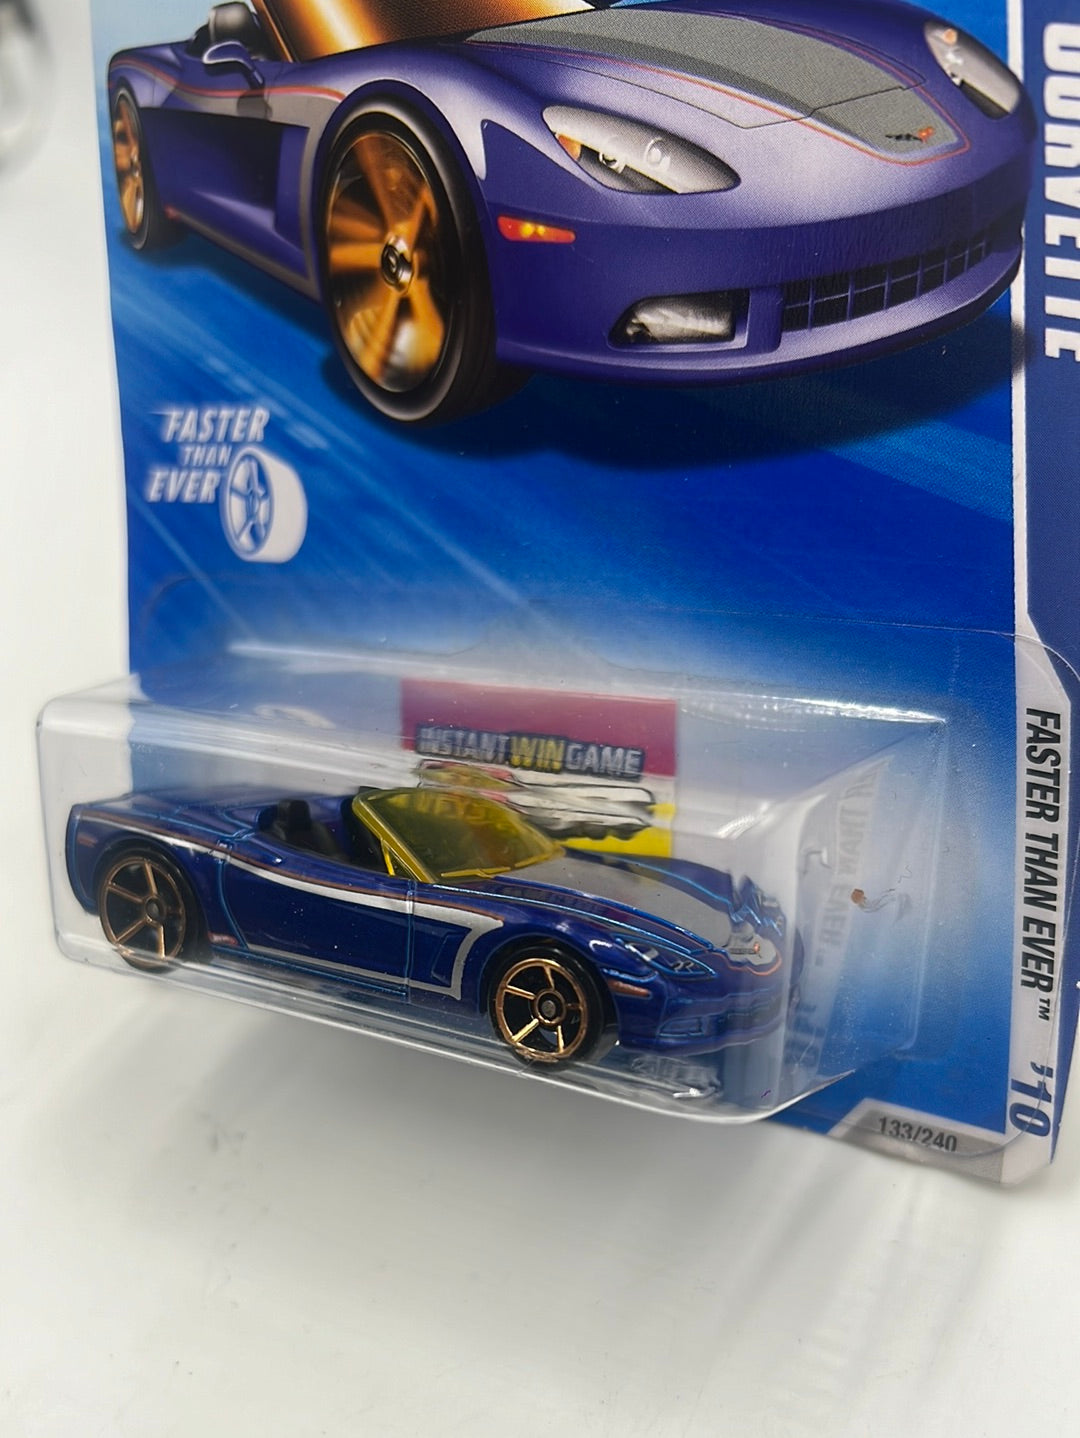 2010 Hot Wheels Faster Than Ever ‘06 Corvette Blue 133/240 15B